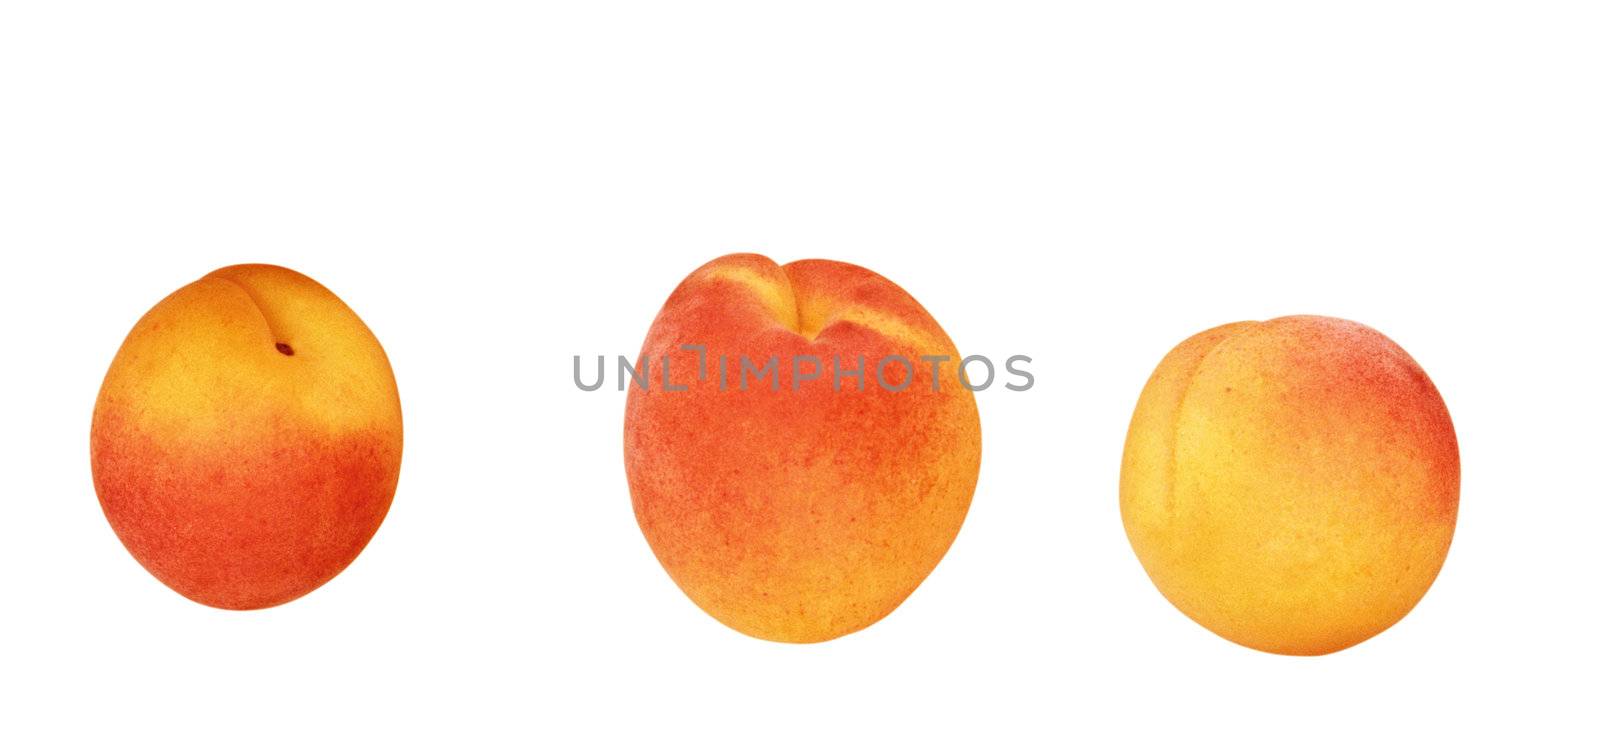 Ripe peaches on a white background by ozaiachin